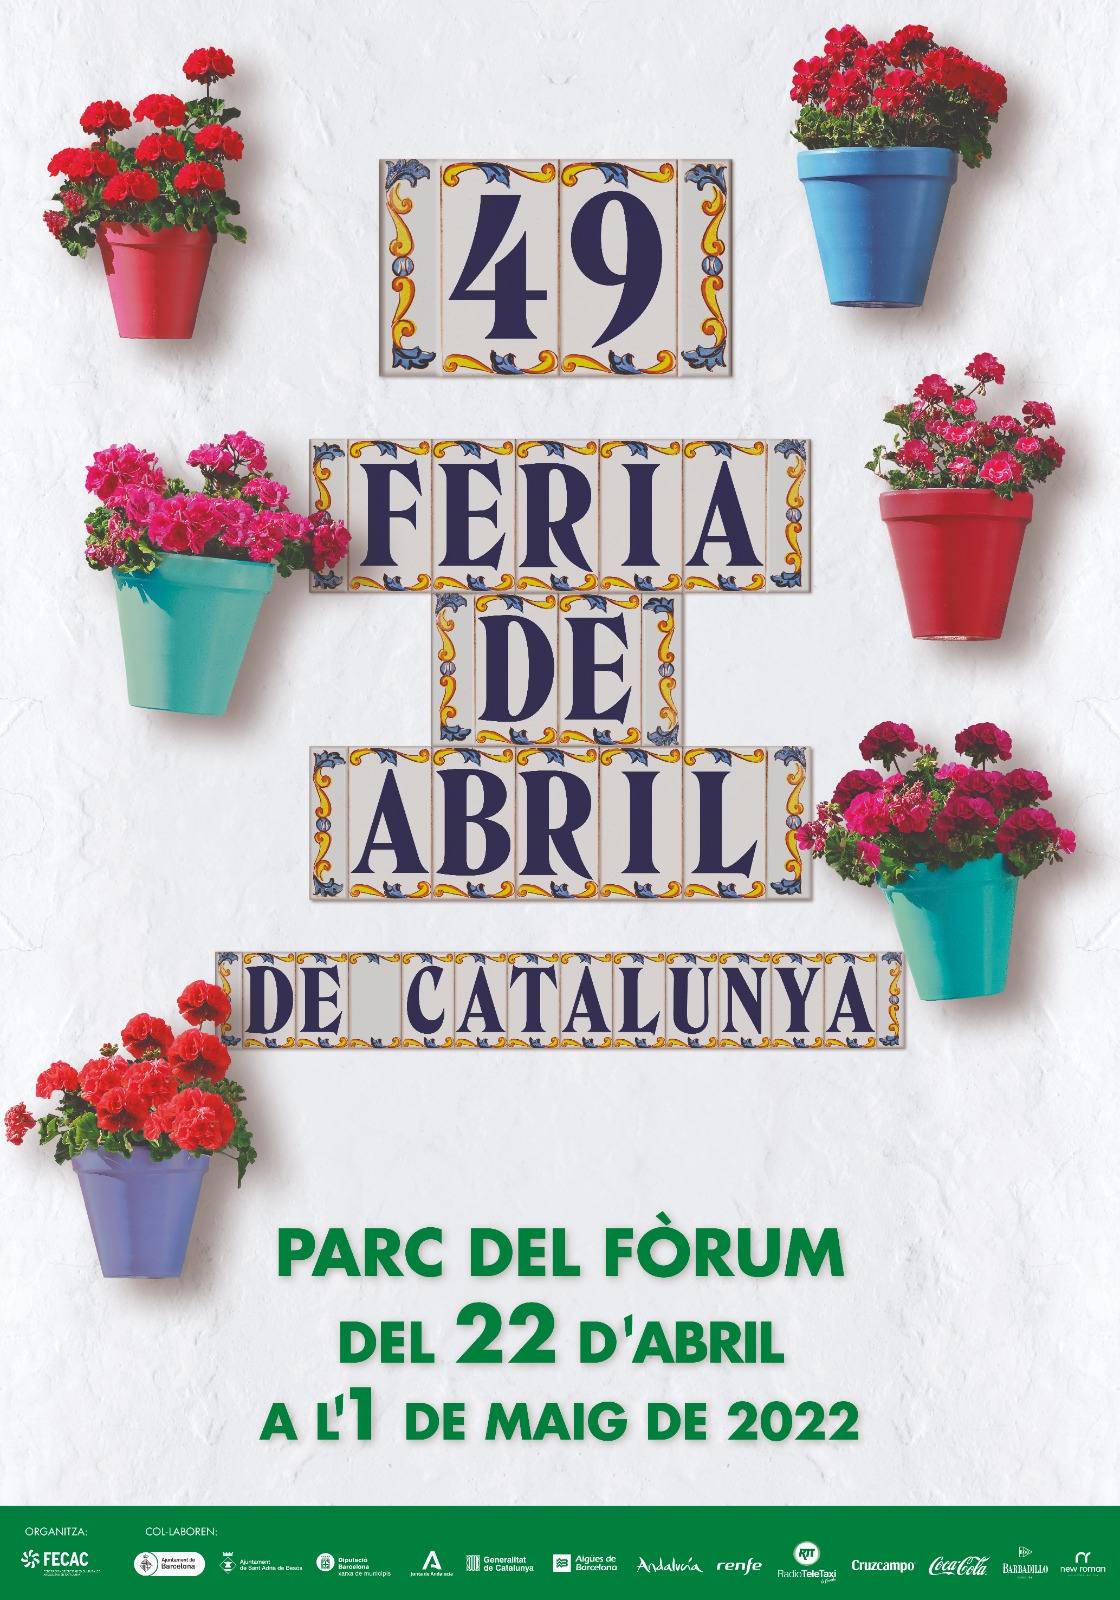 Feria de Abril de Catalunya en Barcelona - Vive la Feria de Abril